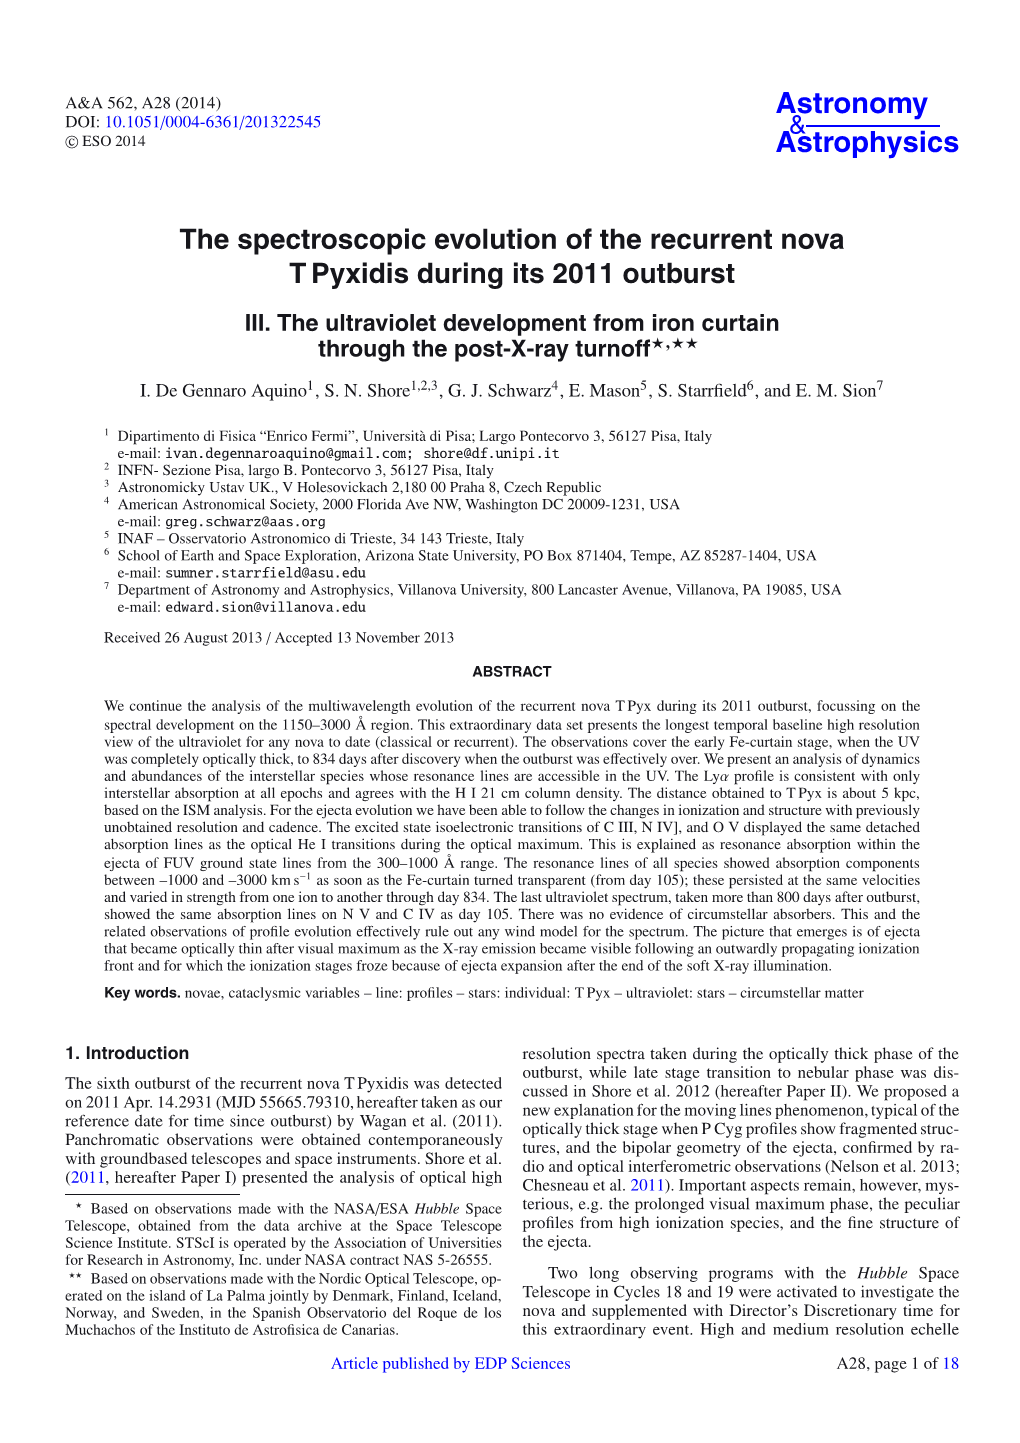 The Spectroscopic Evolution of the Recurrent Nova T Pyxidis During Its 2011 Outburst